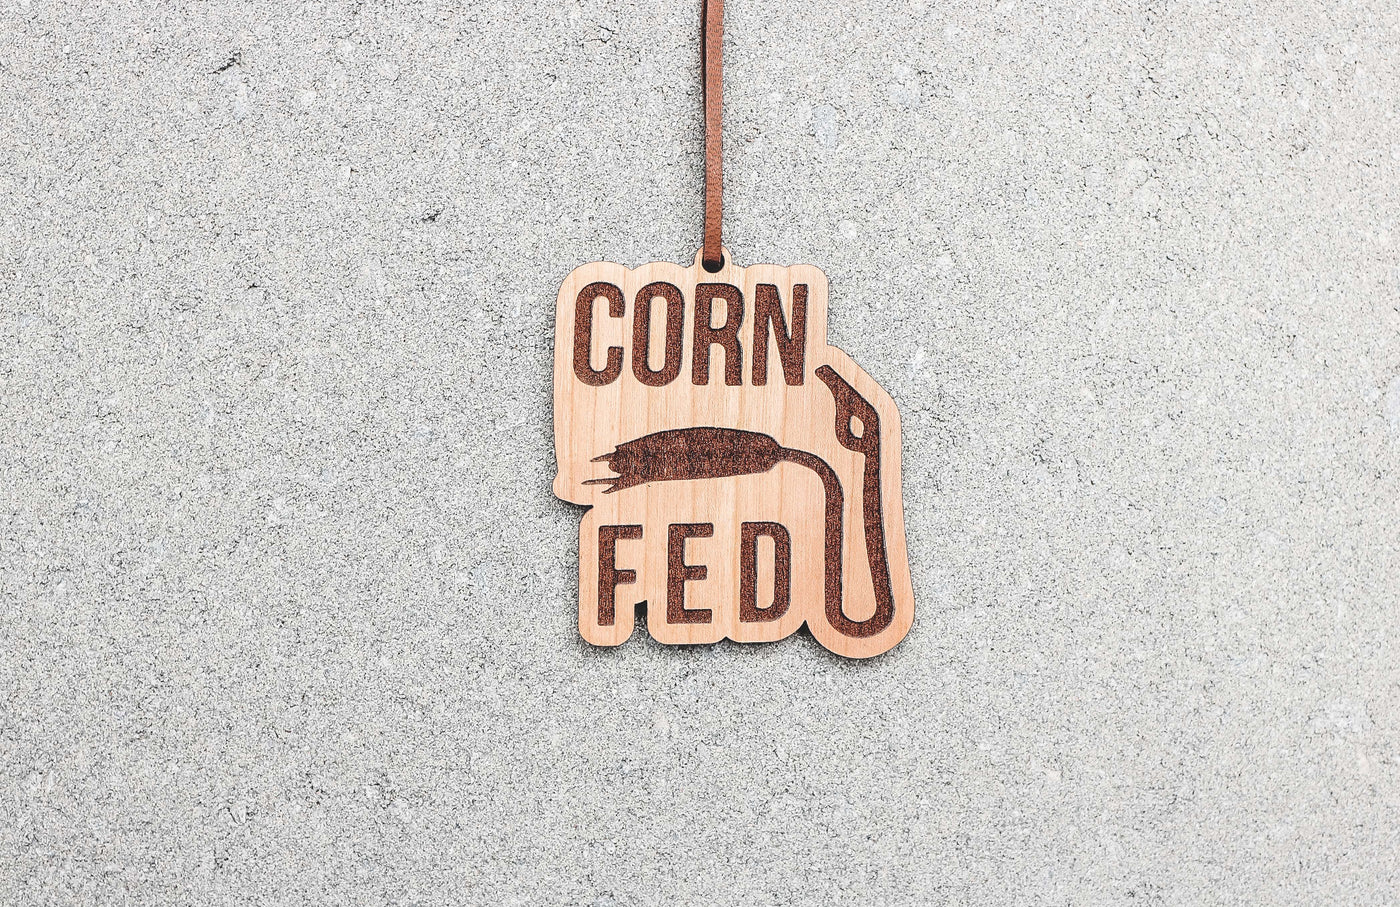 Corn Fed Frshslab